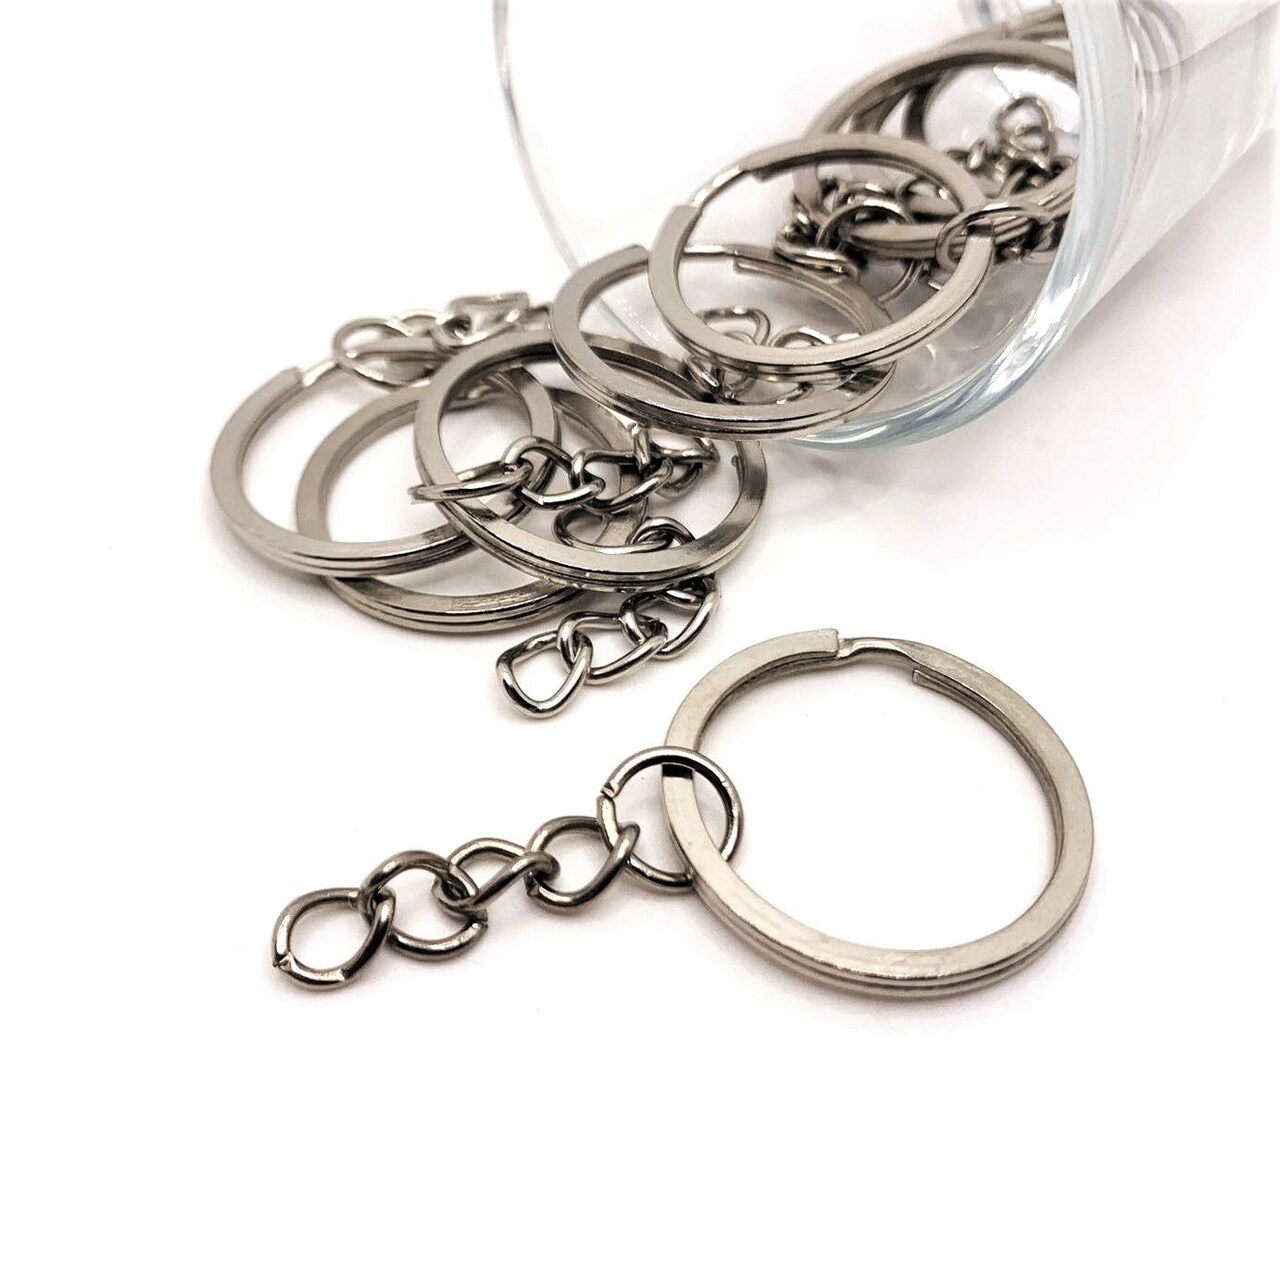 4, 20 or 50 Pieces: Silver Toned Steel Key Chain Starter Split Rings